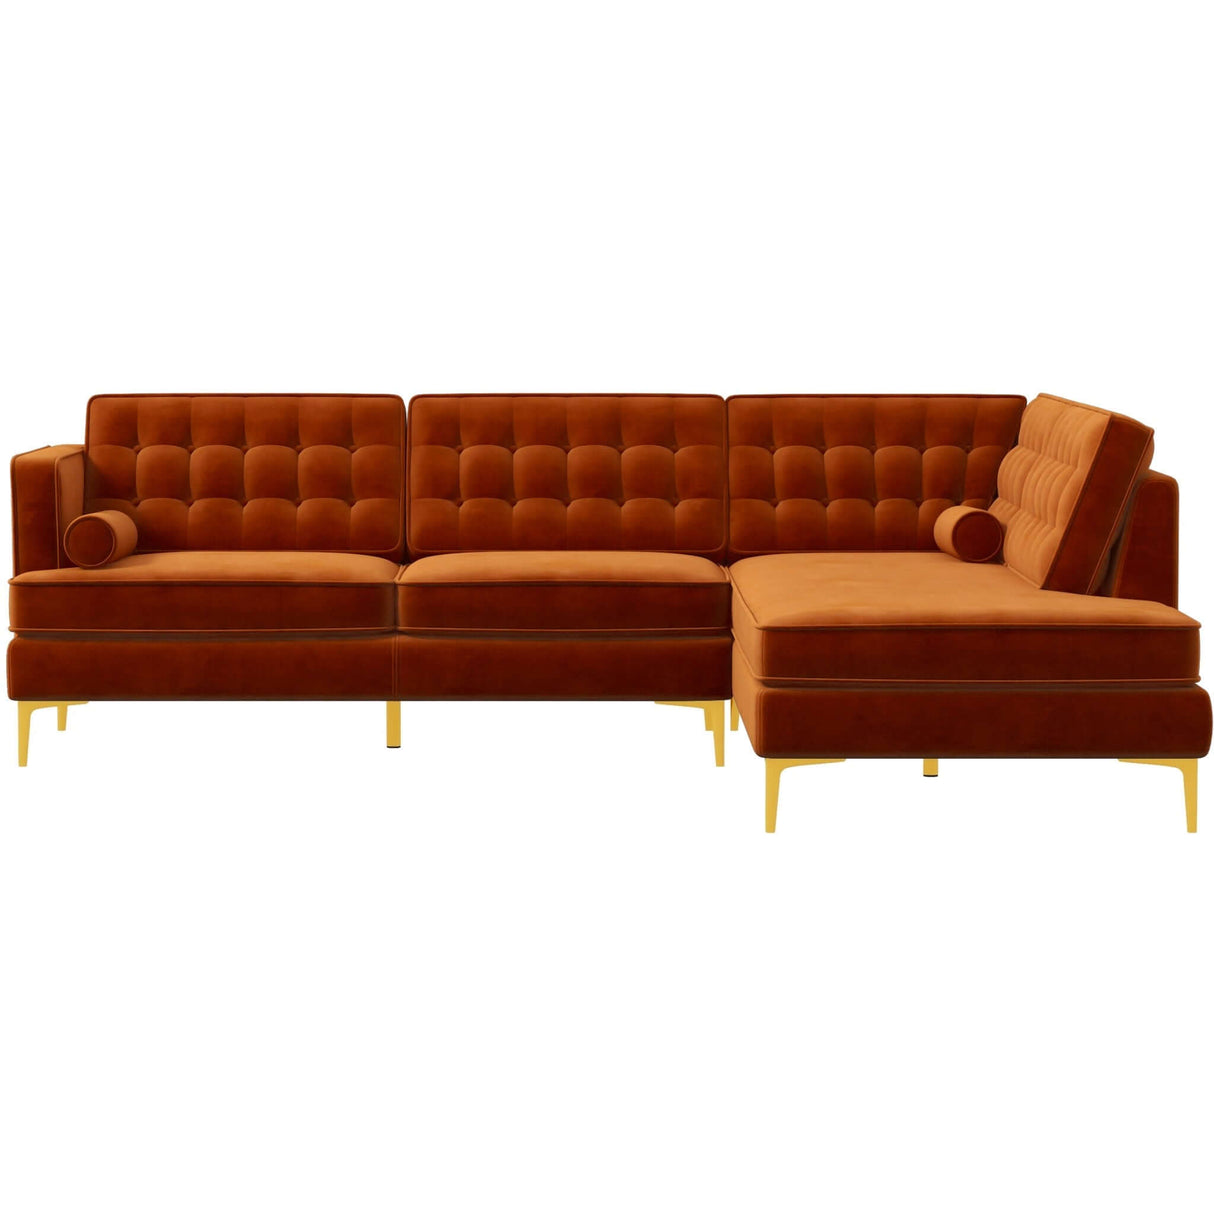 Brooke Mid-Century Modern  Sectional Sofa Blue / Left Facing